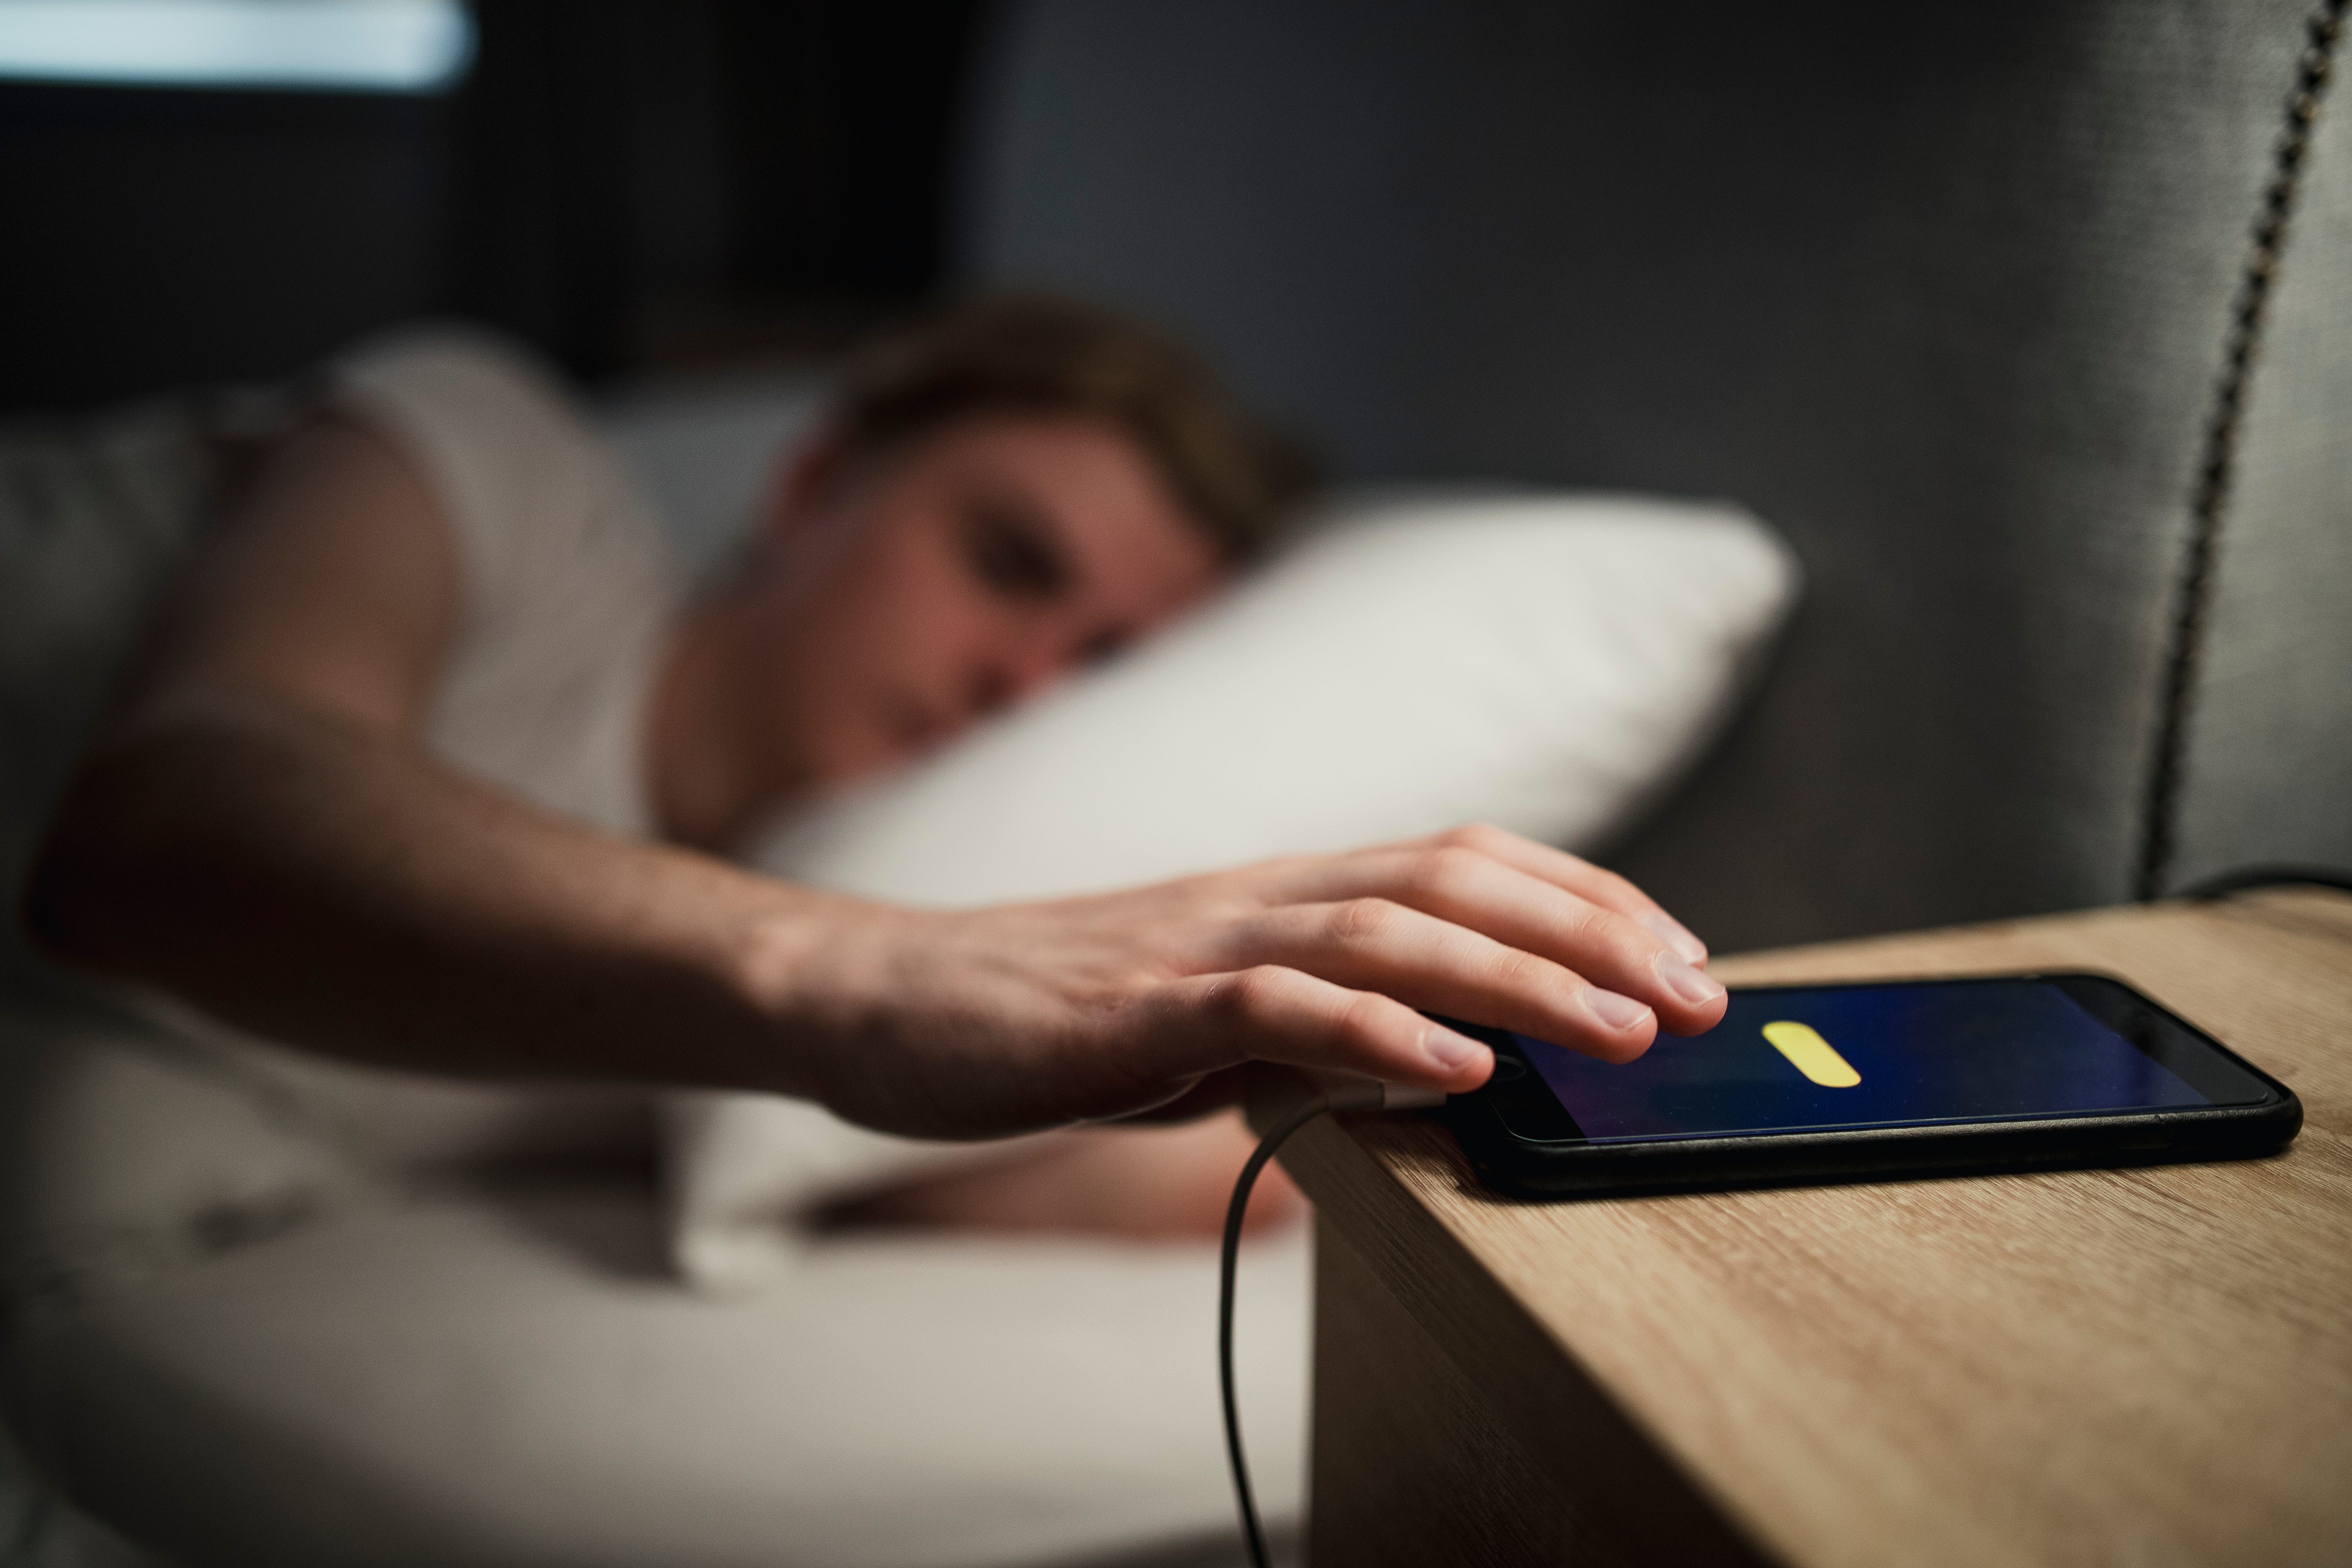 Is It Bad to Sleep Near Your Smartphone? | by Markham Heid | Elemental